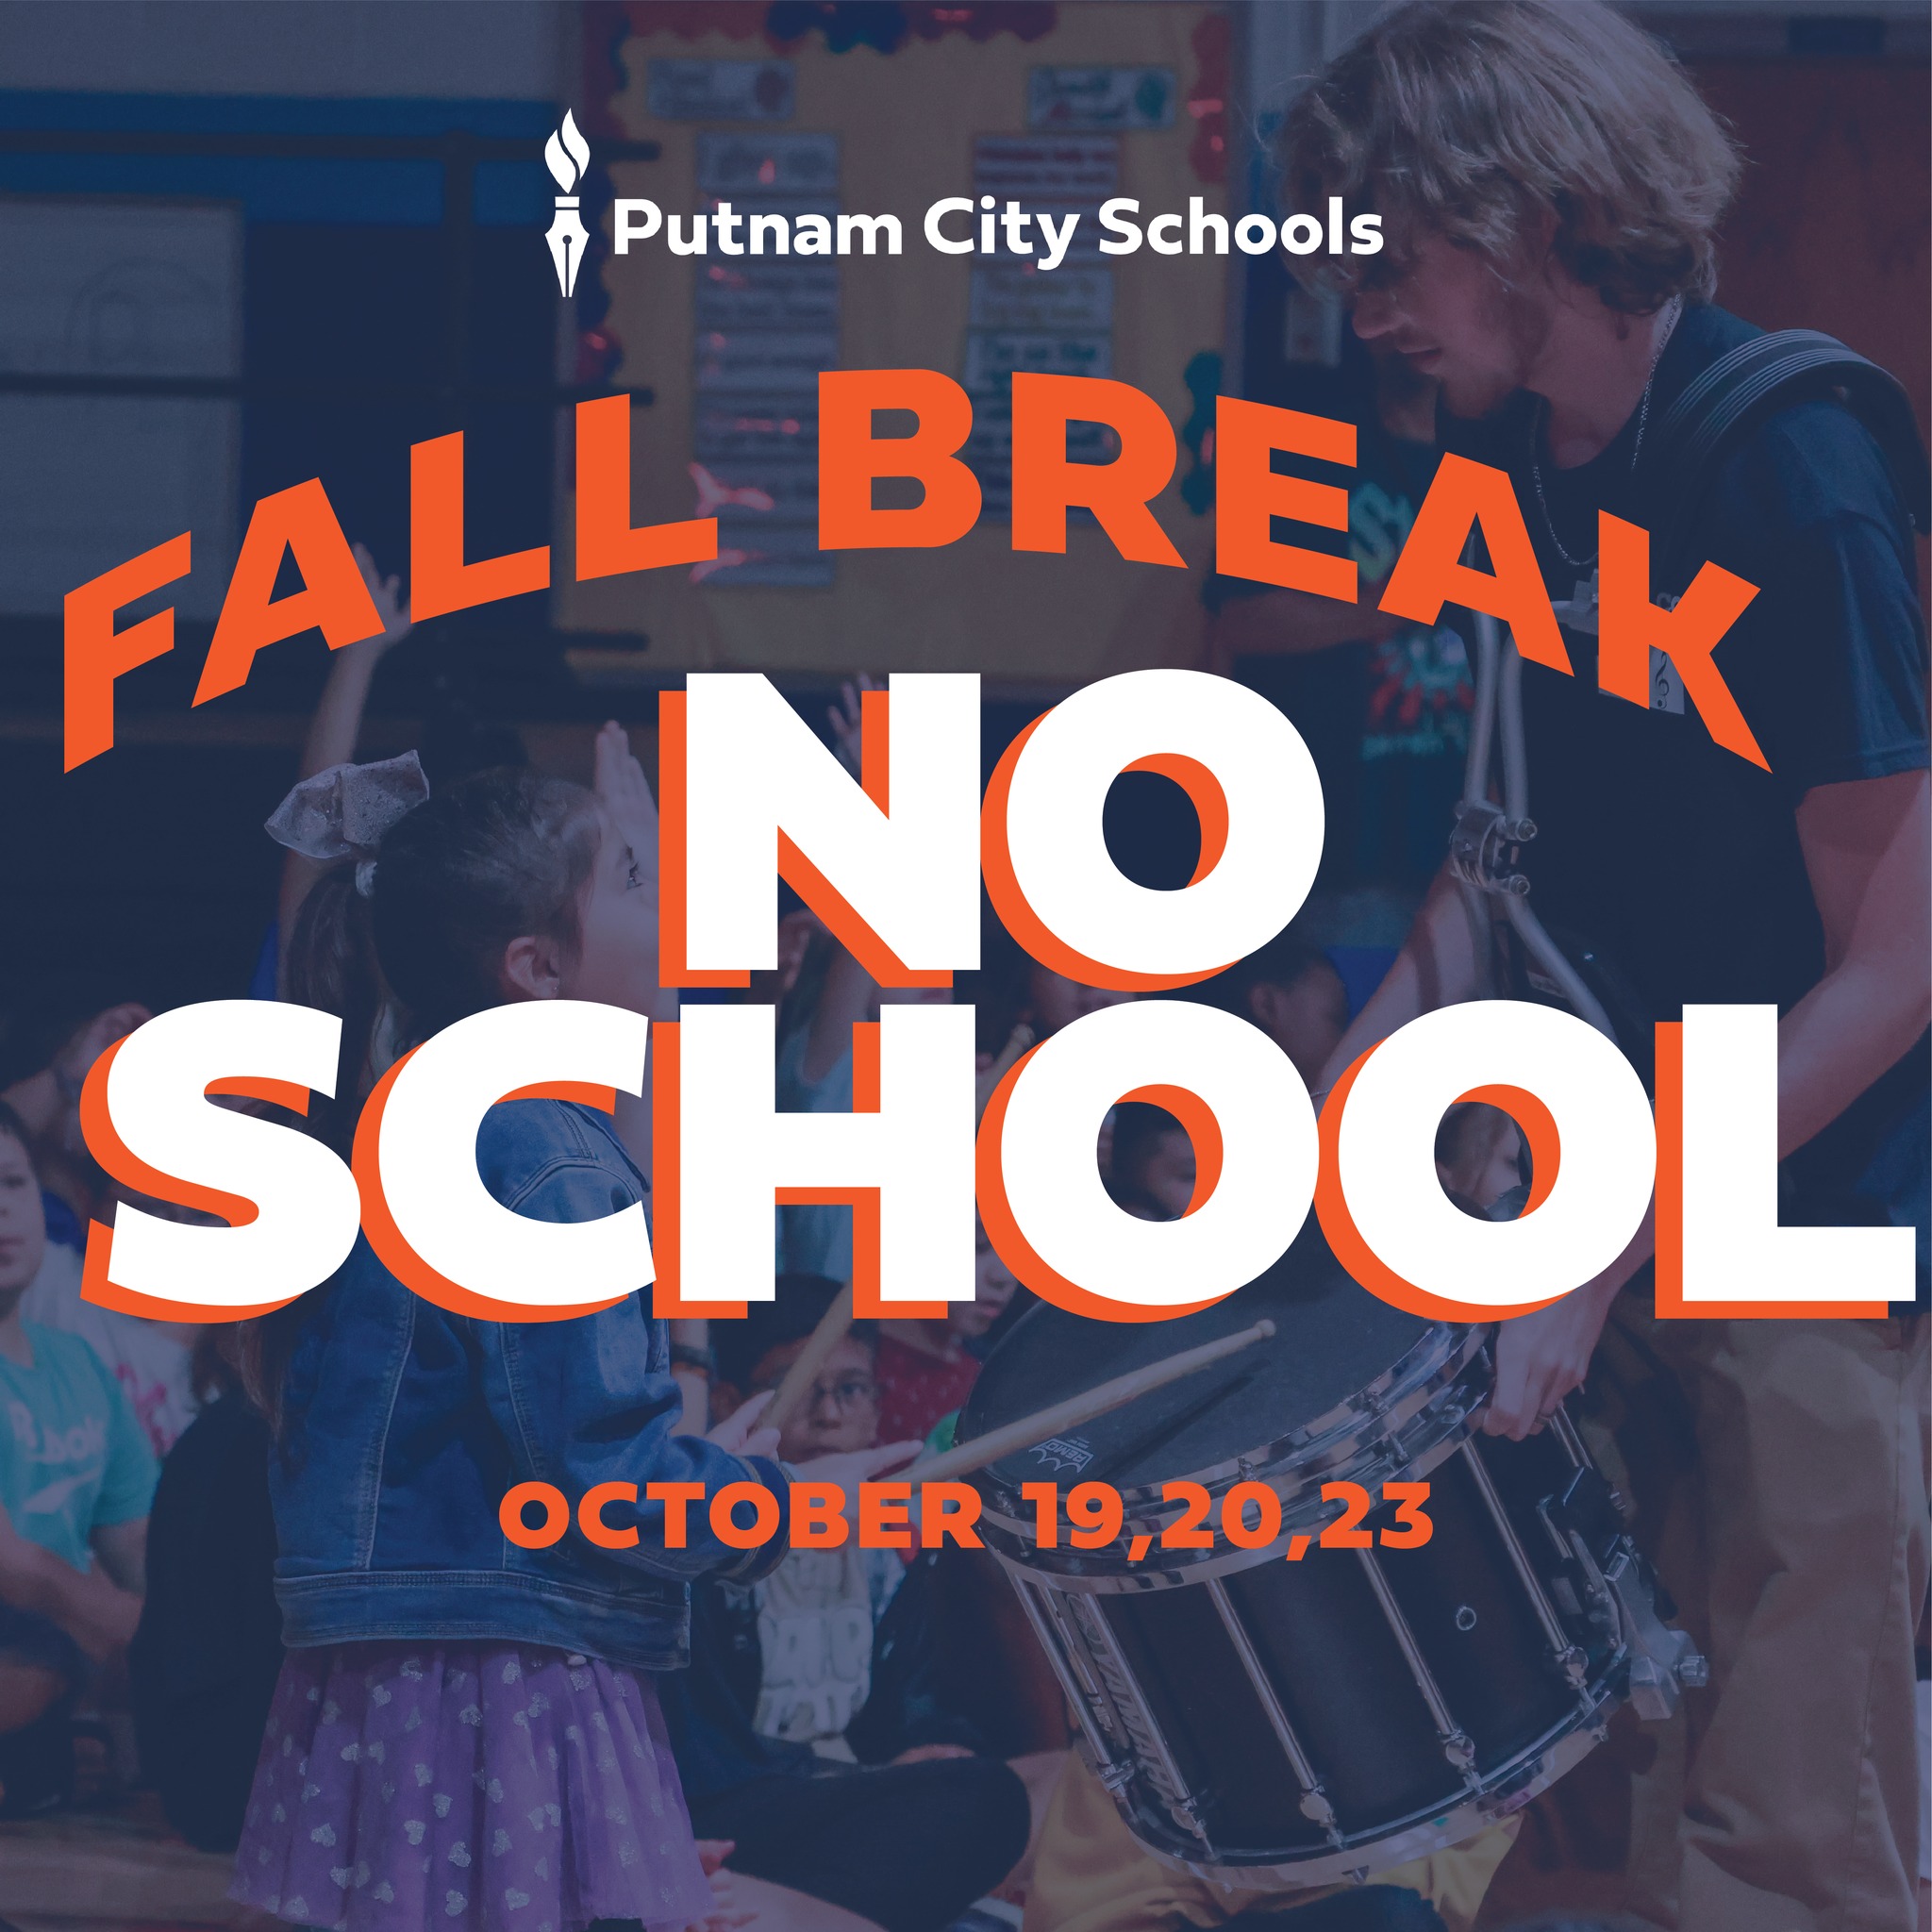 Fall Break - No School October 19, 20, 23